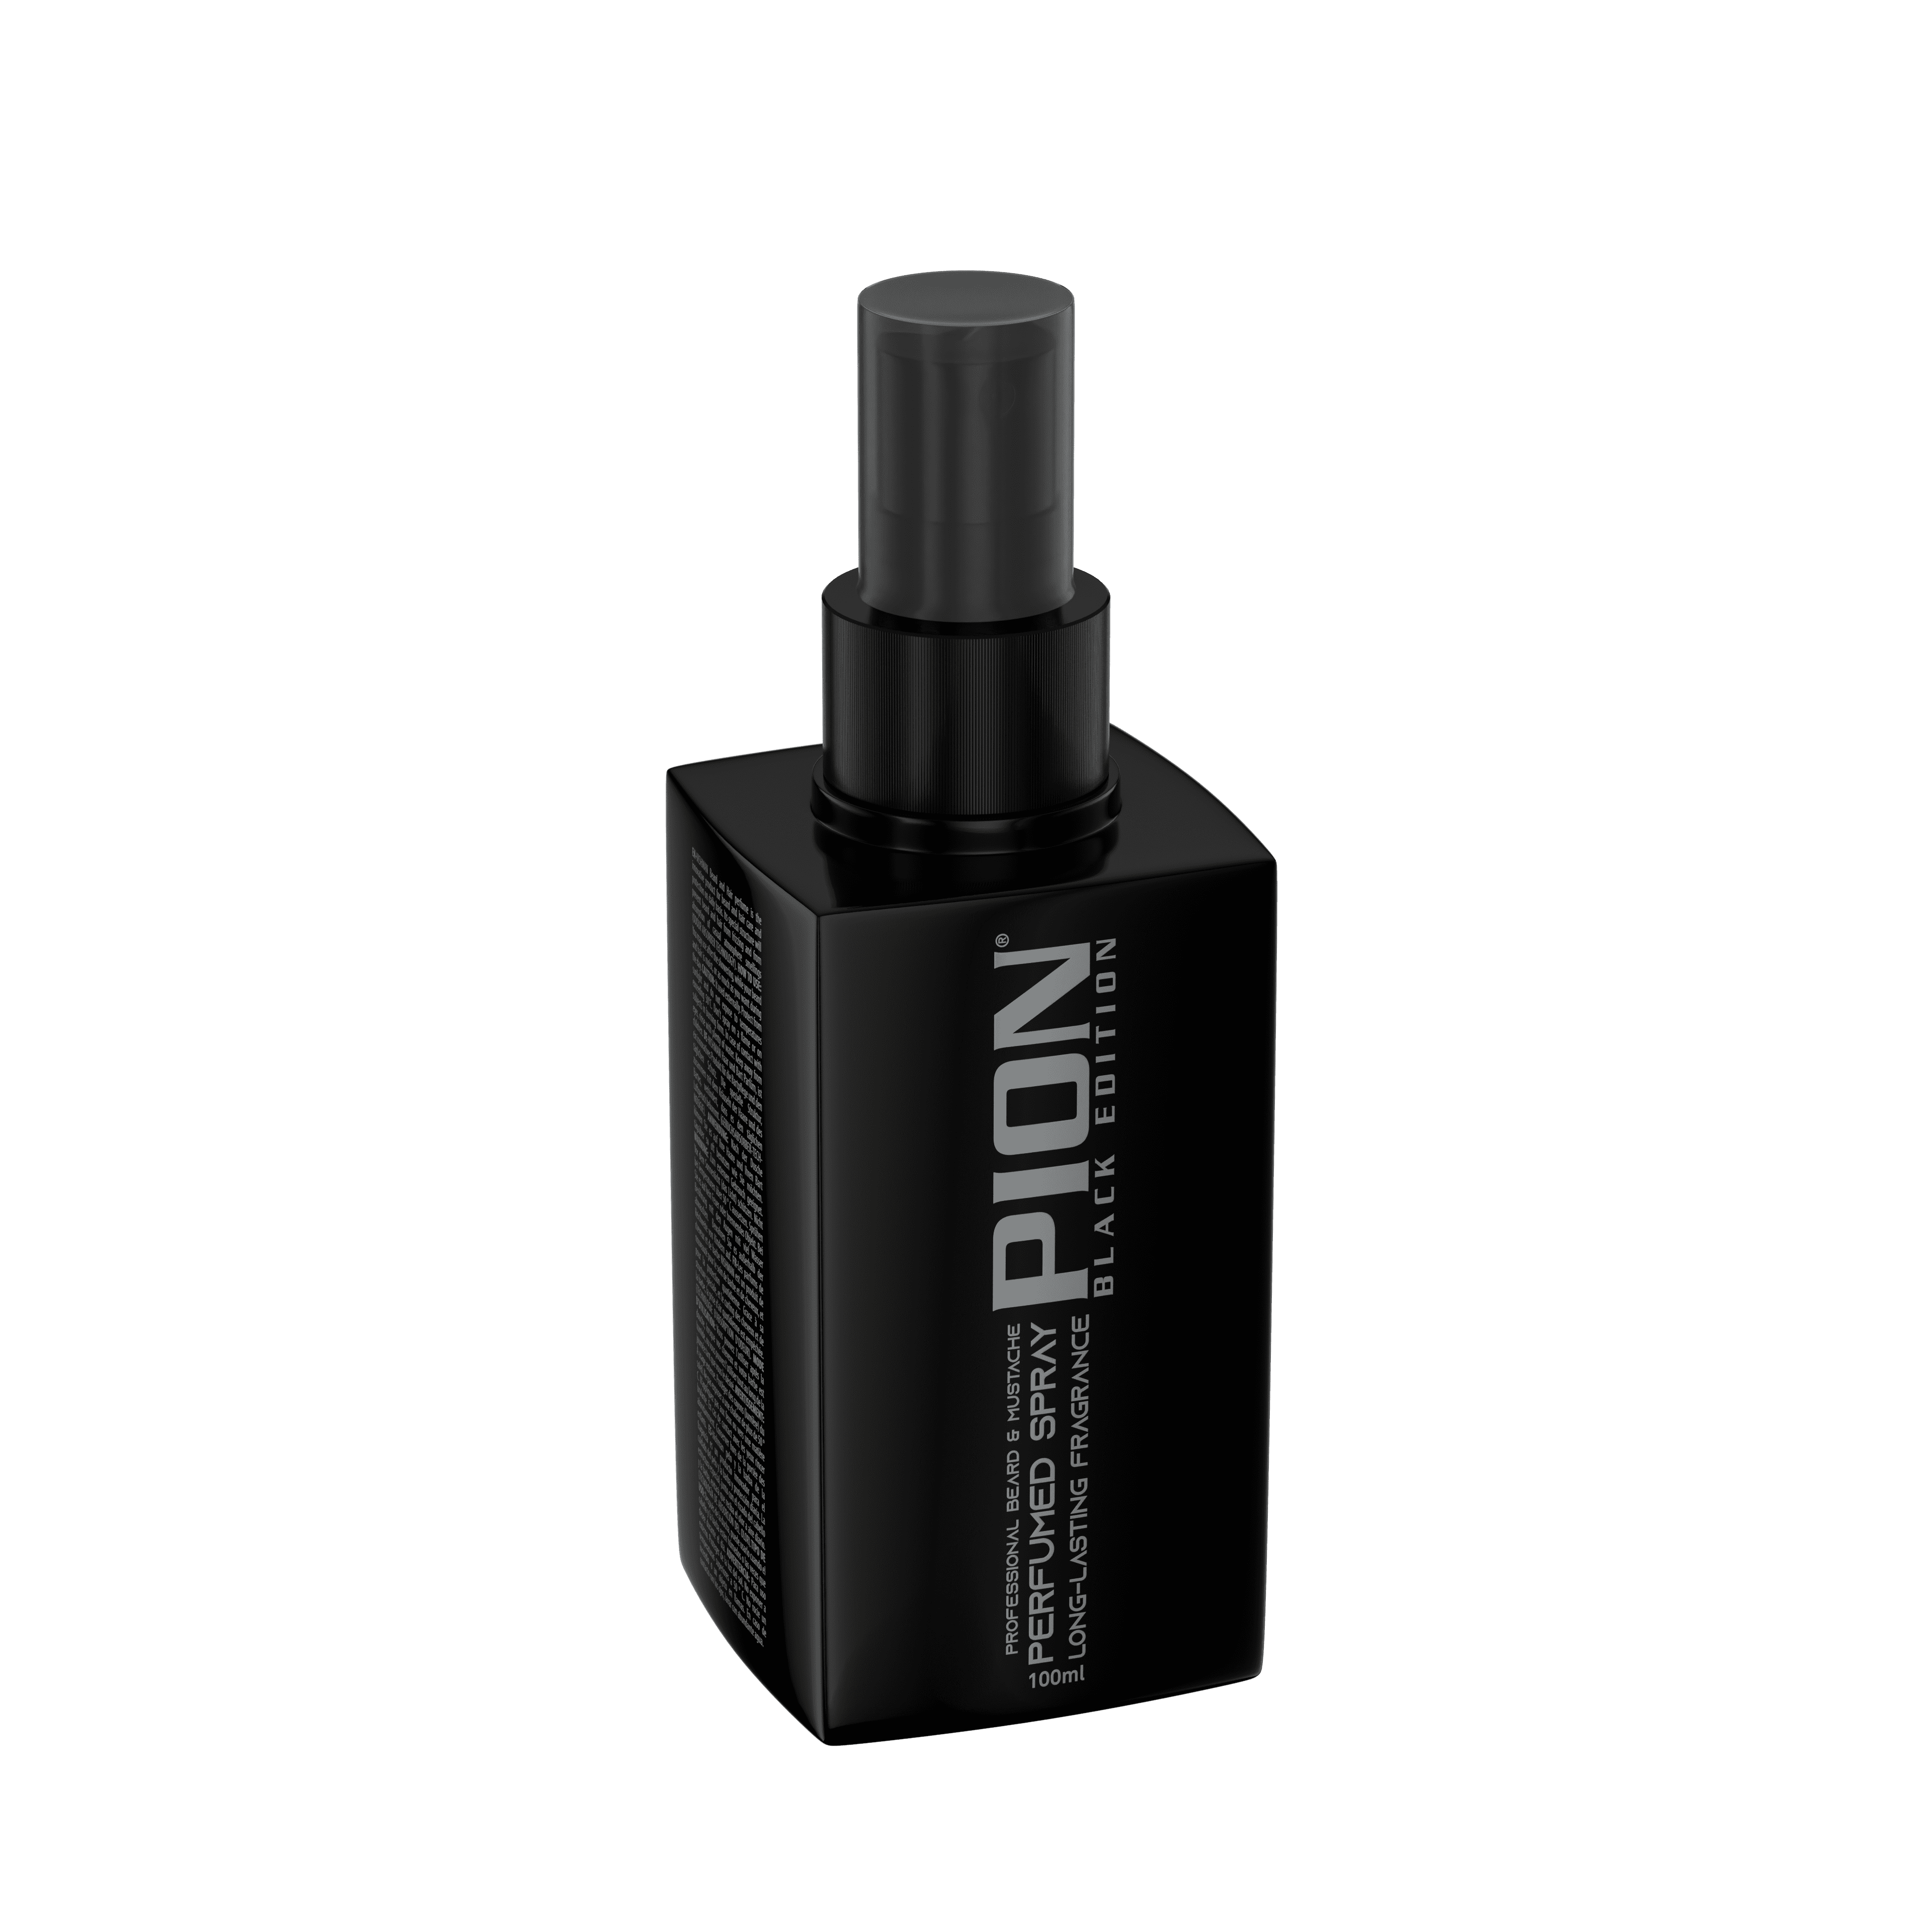 Pion Beard & Mustache Parfumed Spray 100ml - PION BLACK EDITION